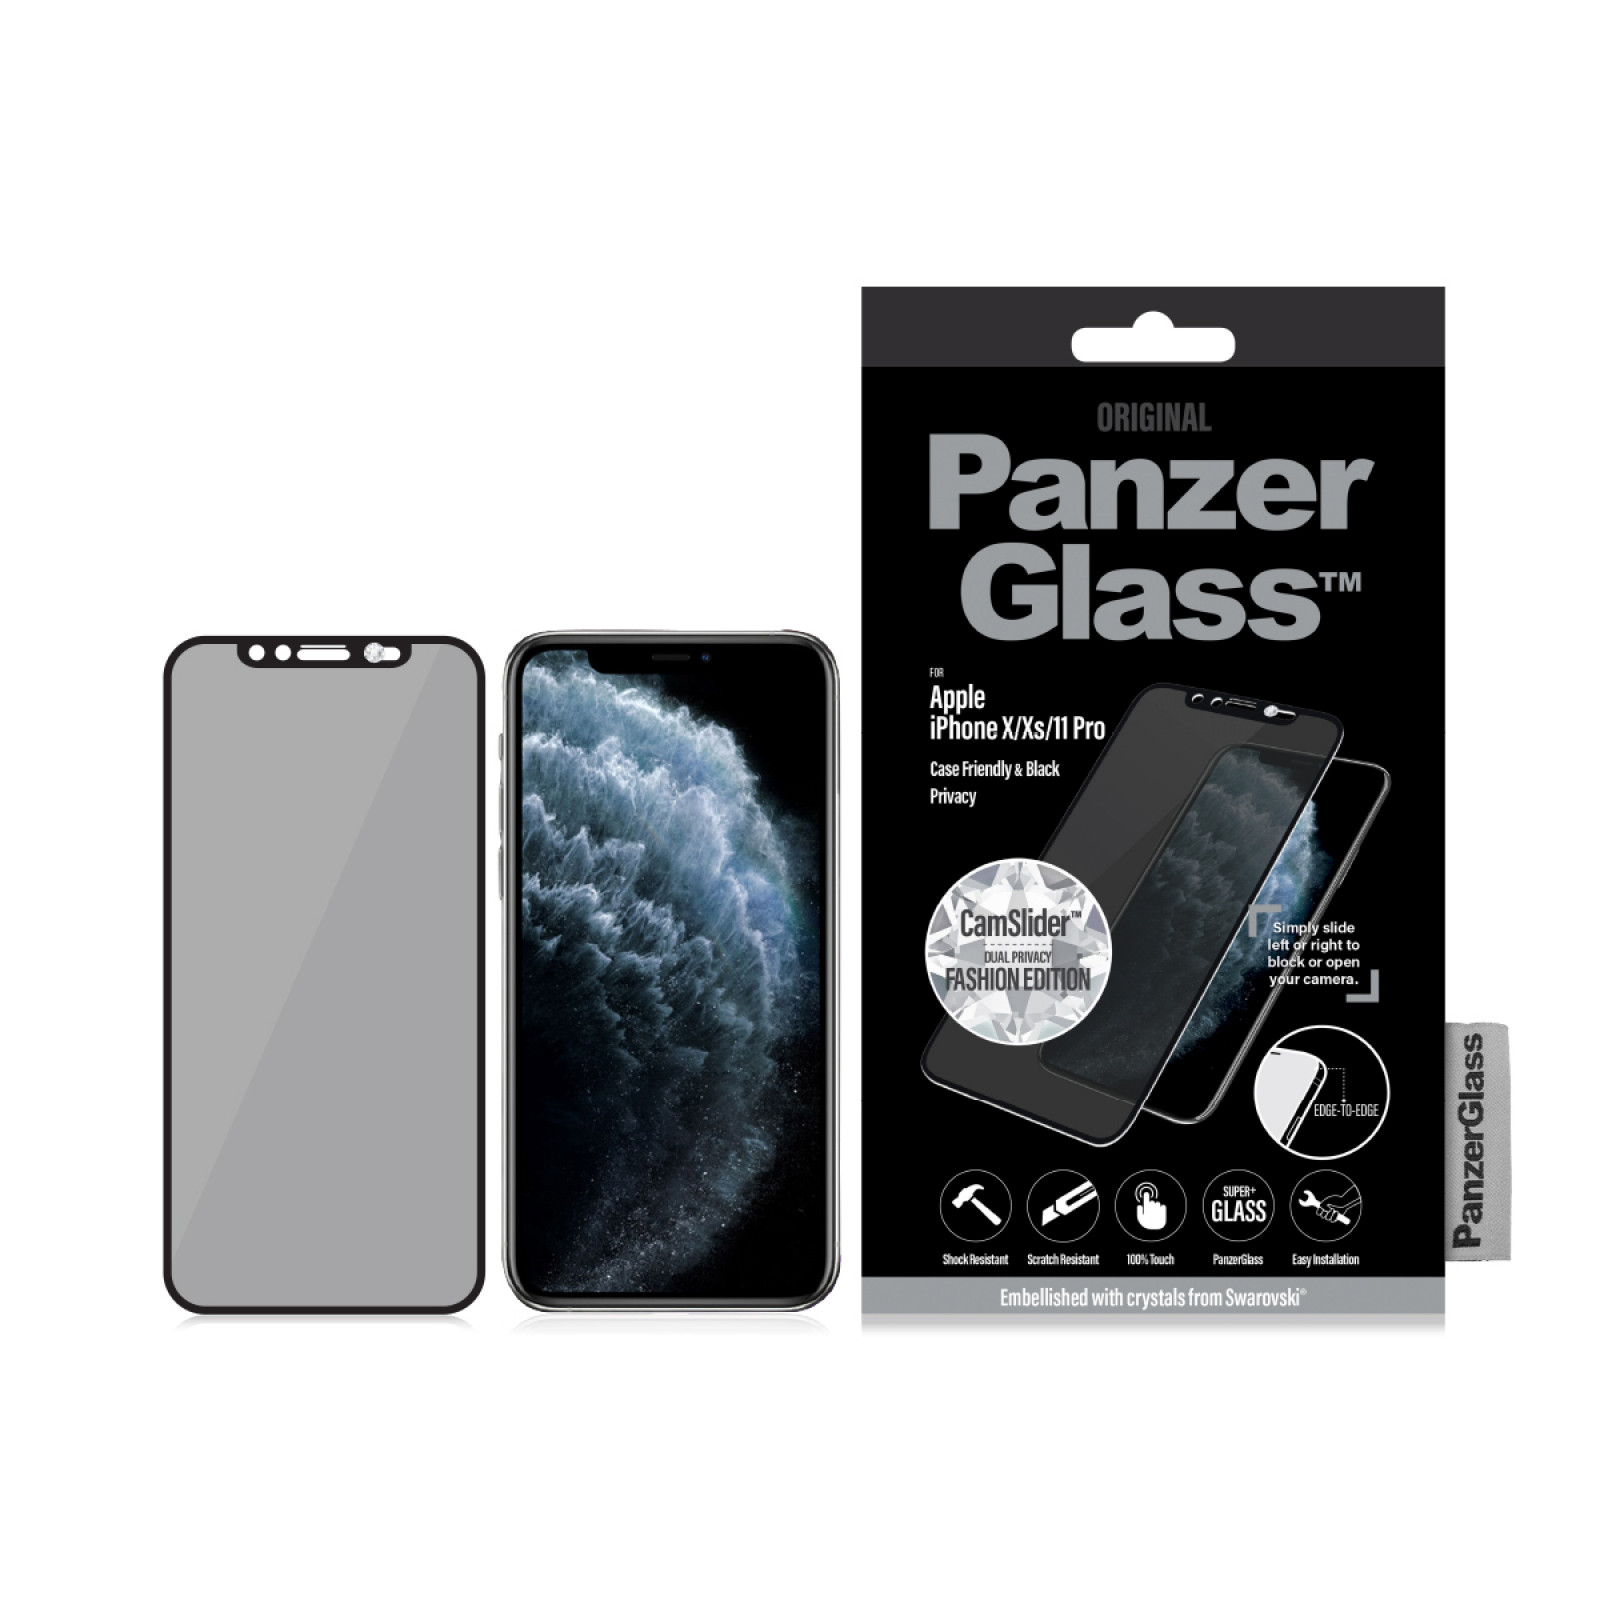 Стъклен протектор PanzerGlass за Apple Iphone X/XS /11 Pro, Privacy, CaseFriendly, CamSlider, Swarovski Edition- Черен,